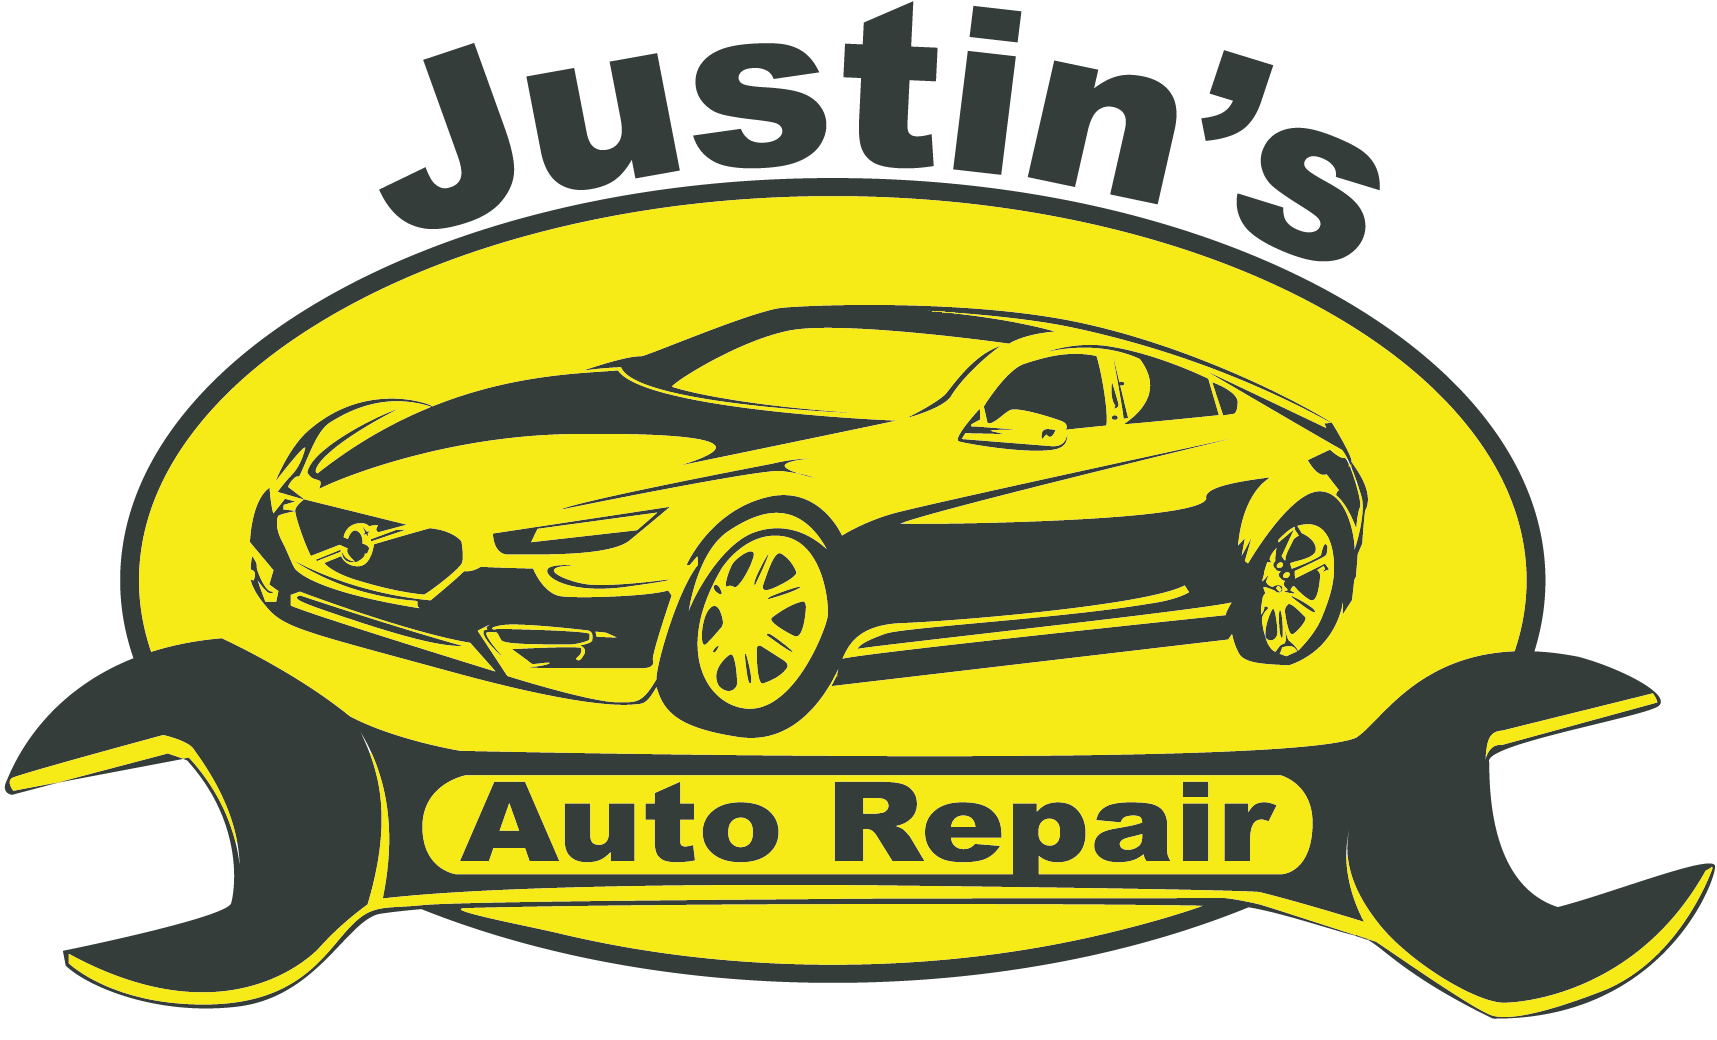 Car Mechanic Logo - Home. Justin's Auto Repair